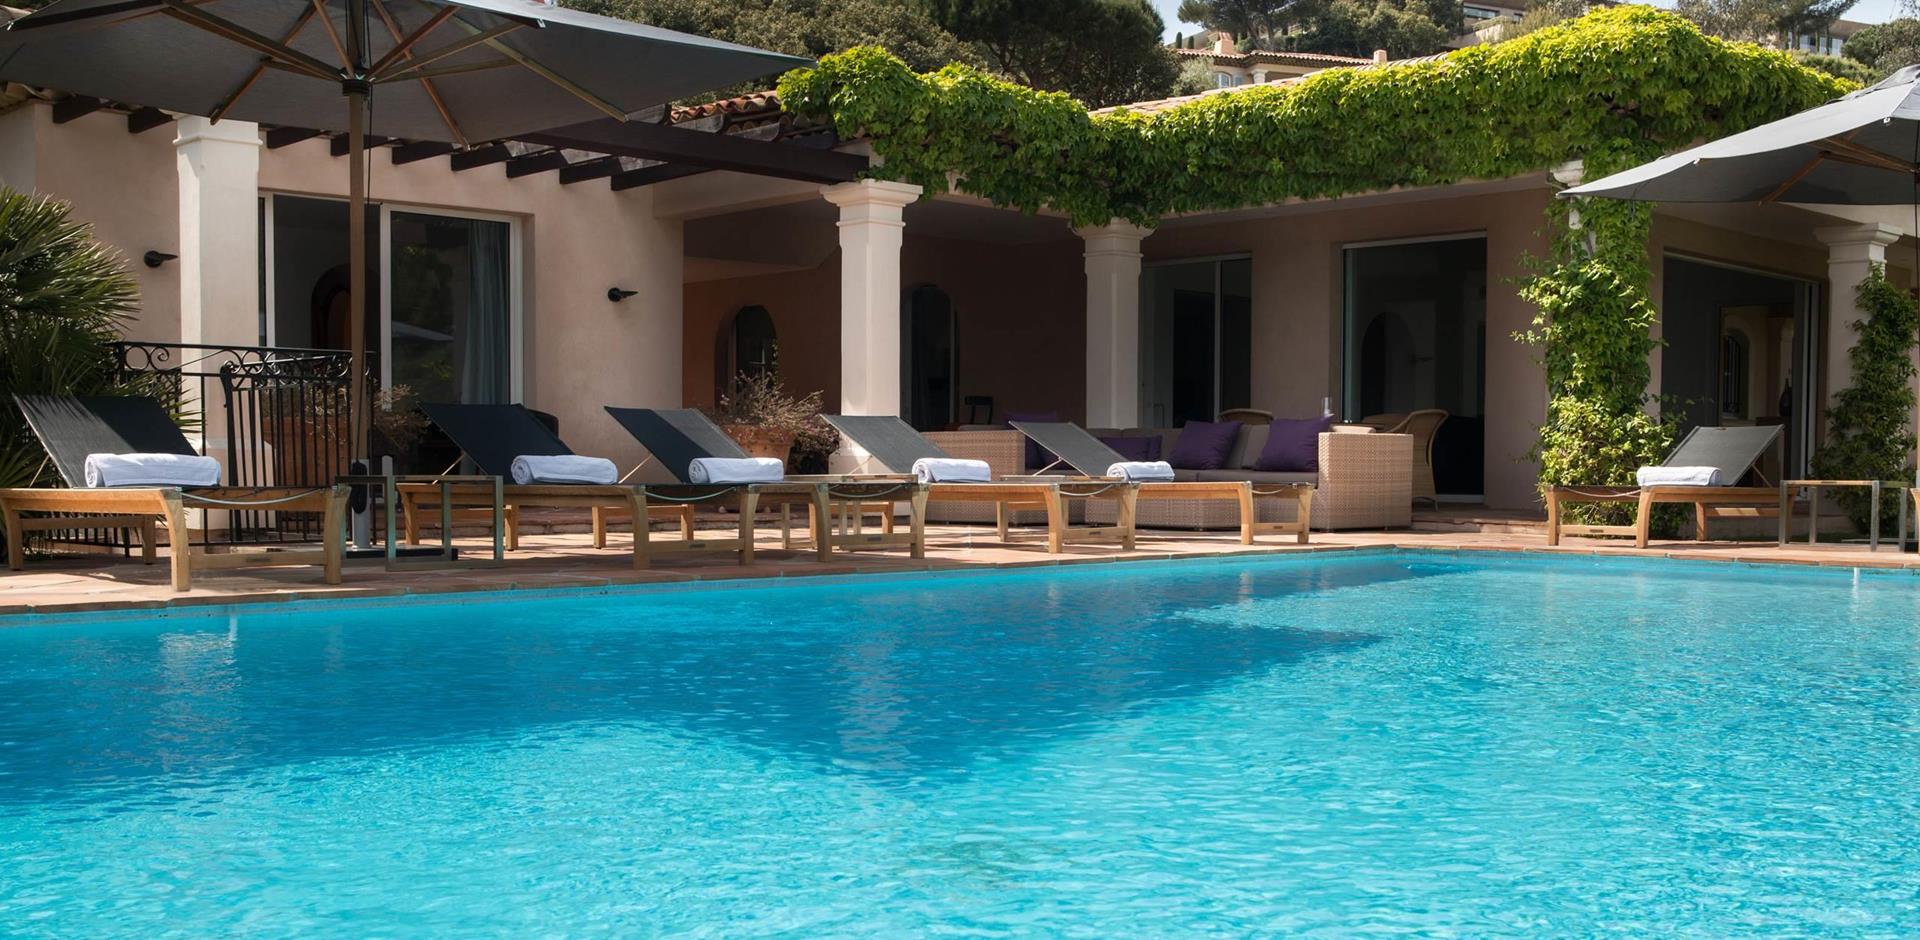 Swimming pool, Villa Pivoine, La Reserve, Ramatuelle, Saint Tropez